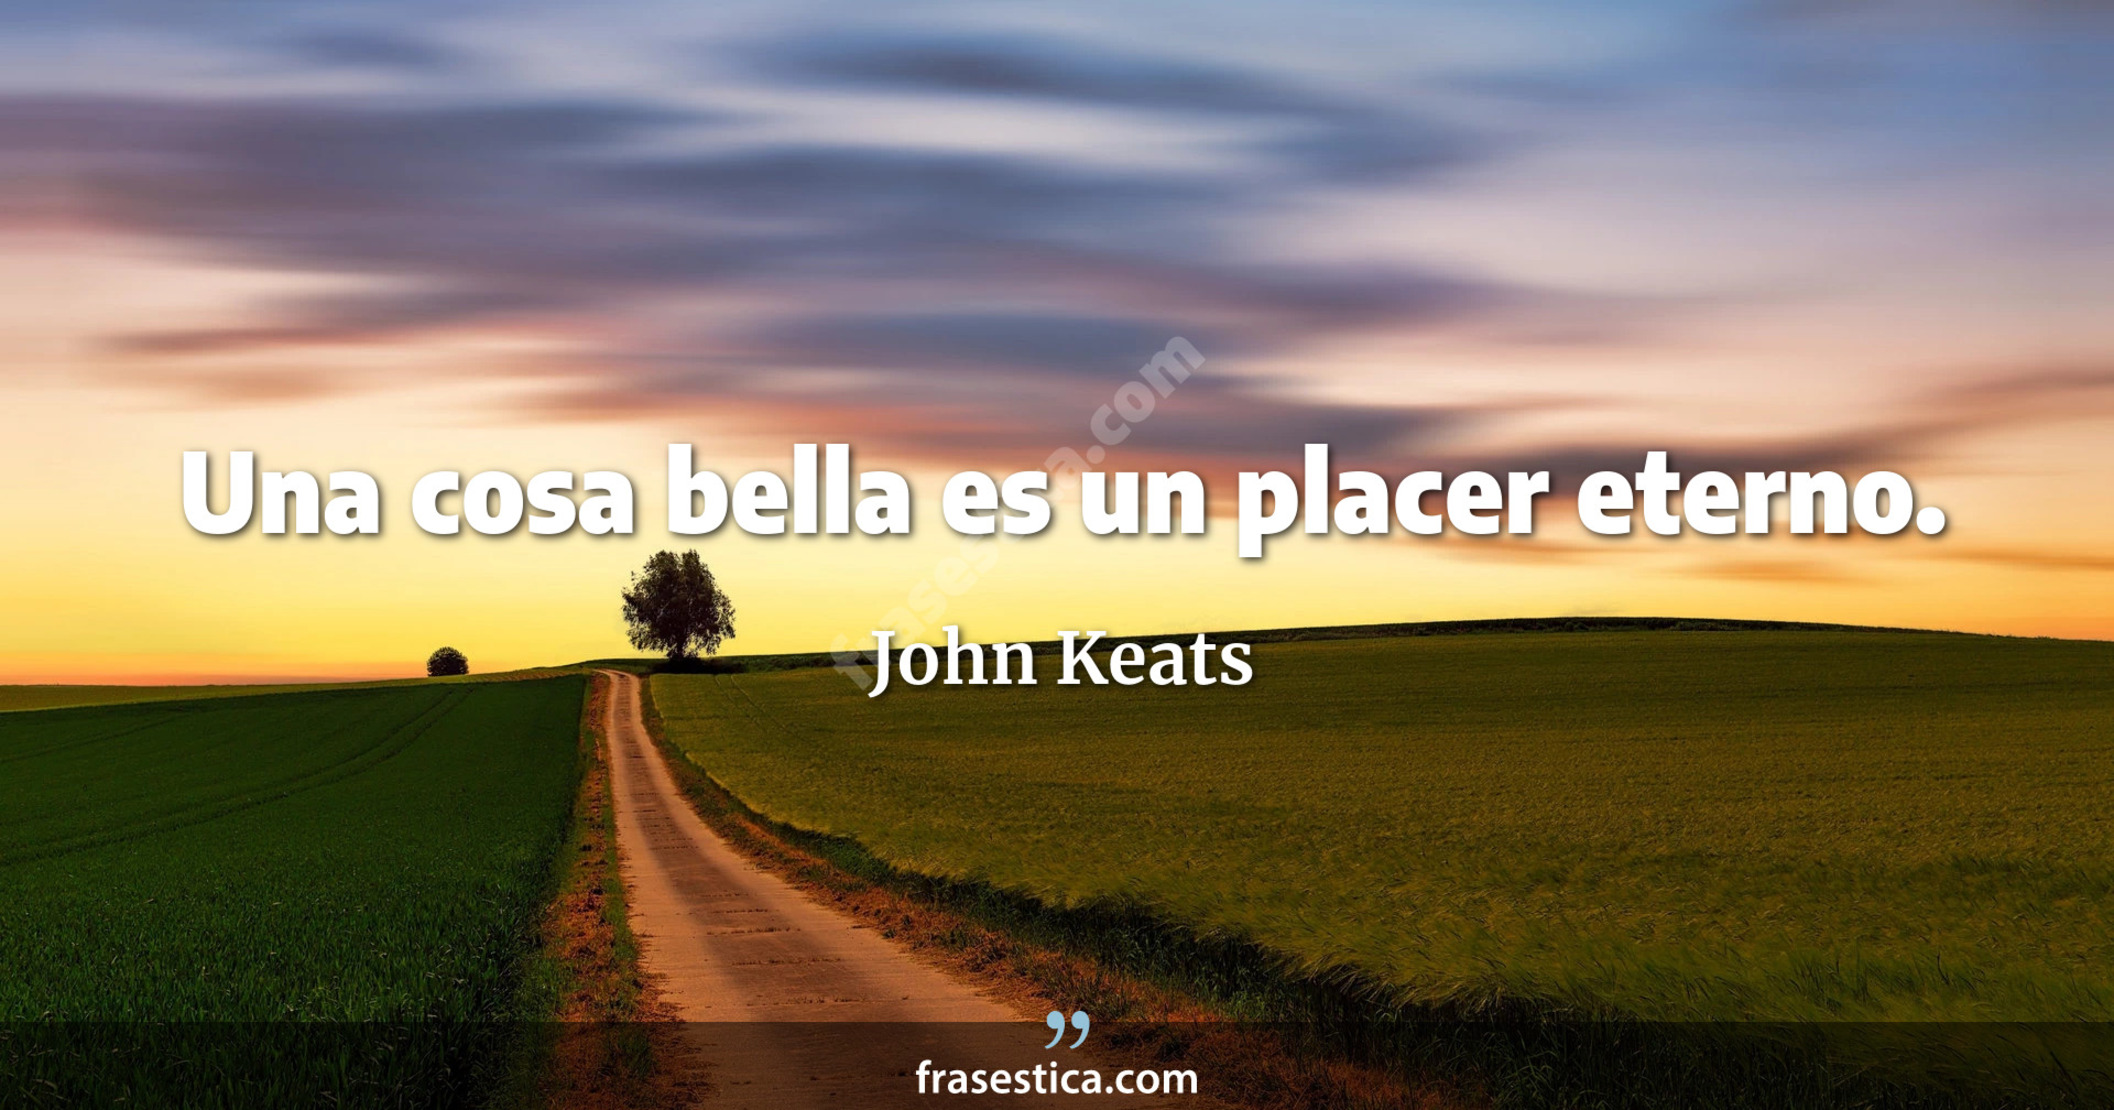 Una cosa bella es un placer eterno. - John Keats